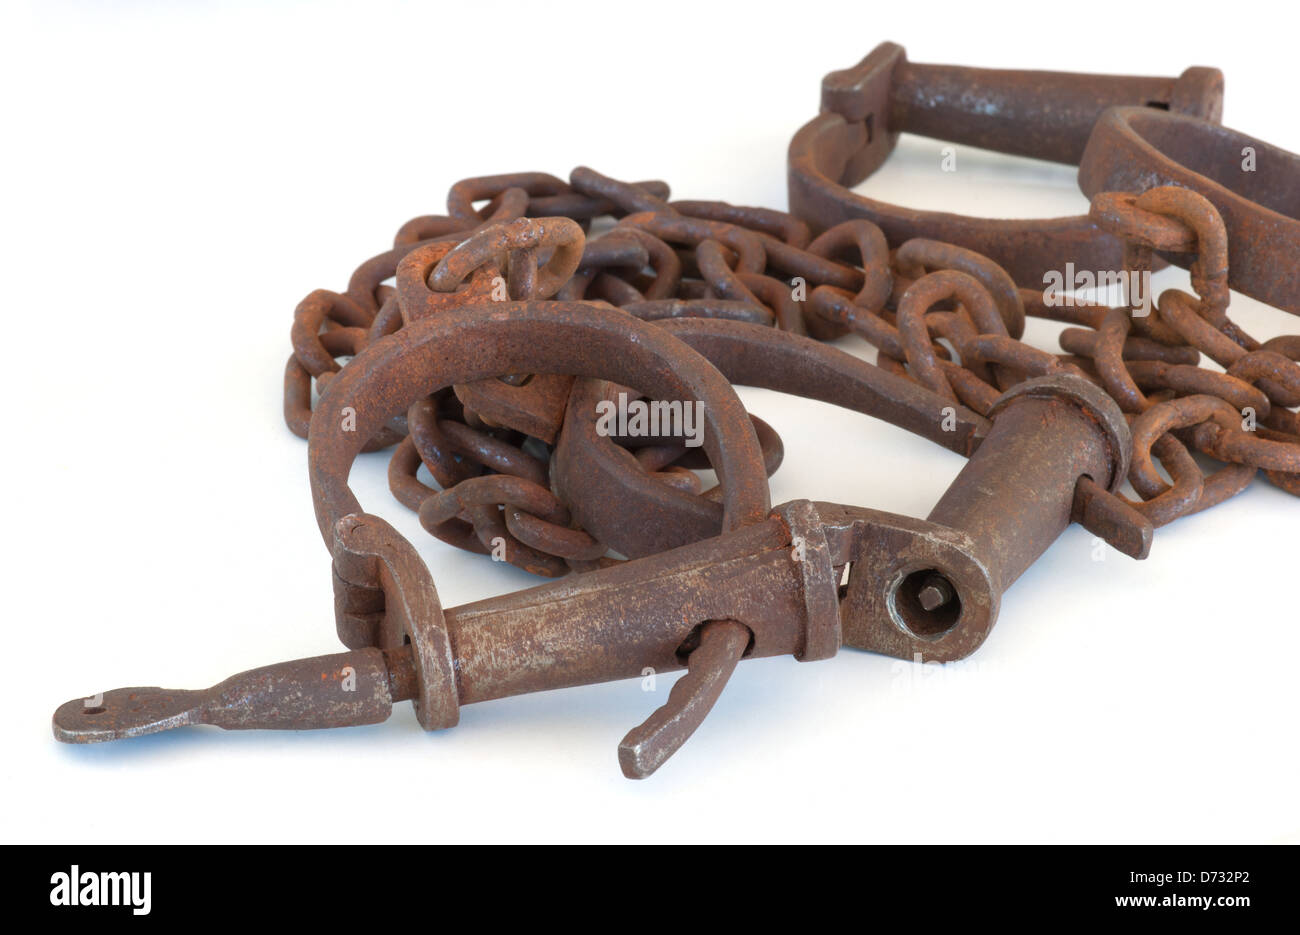 https://c8.alamy.com/comp/D732P2/rusty-iron-cuff-leg-restraints-with-key-chain-D732P2.jpg